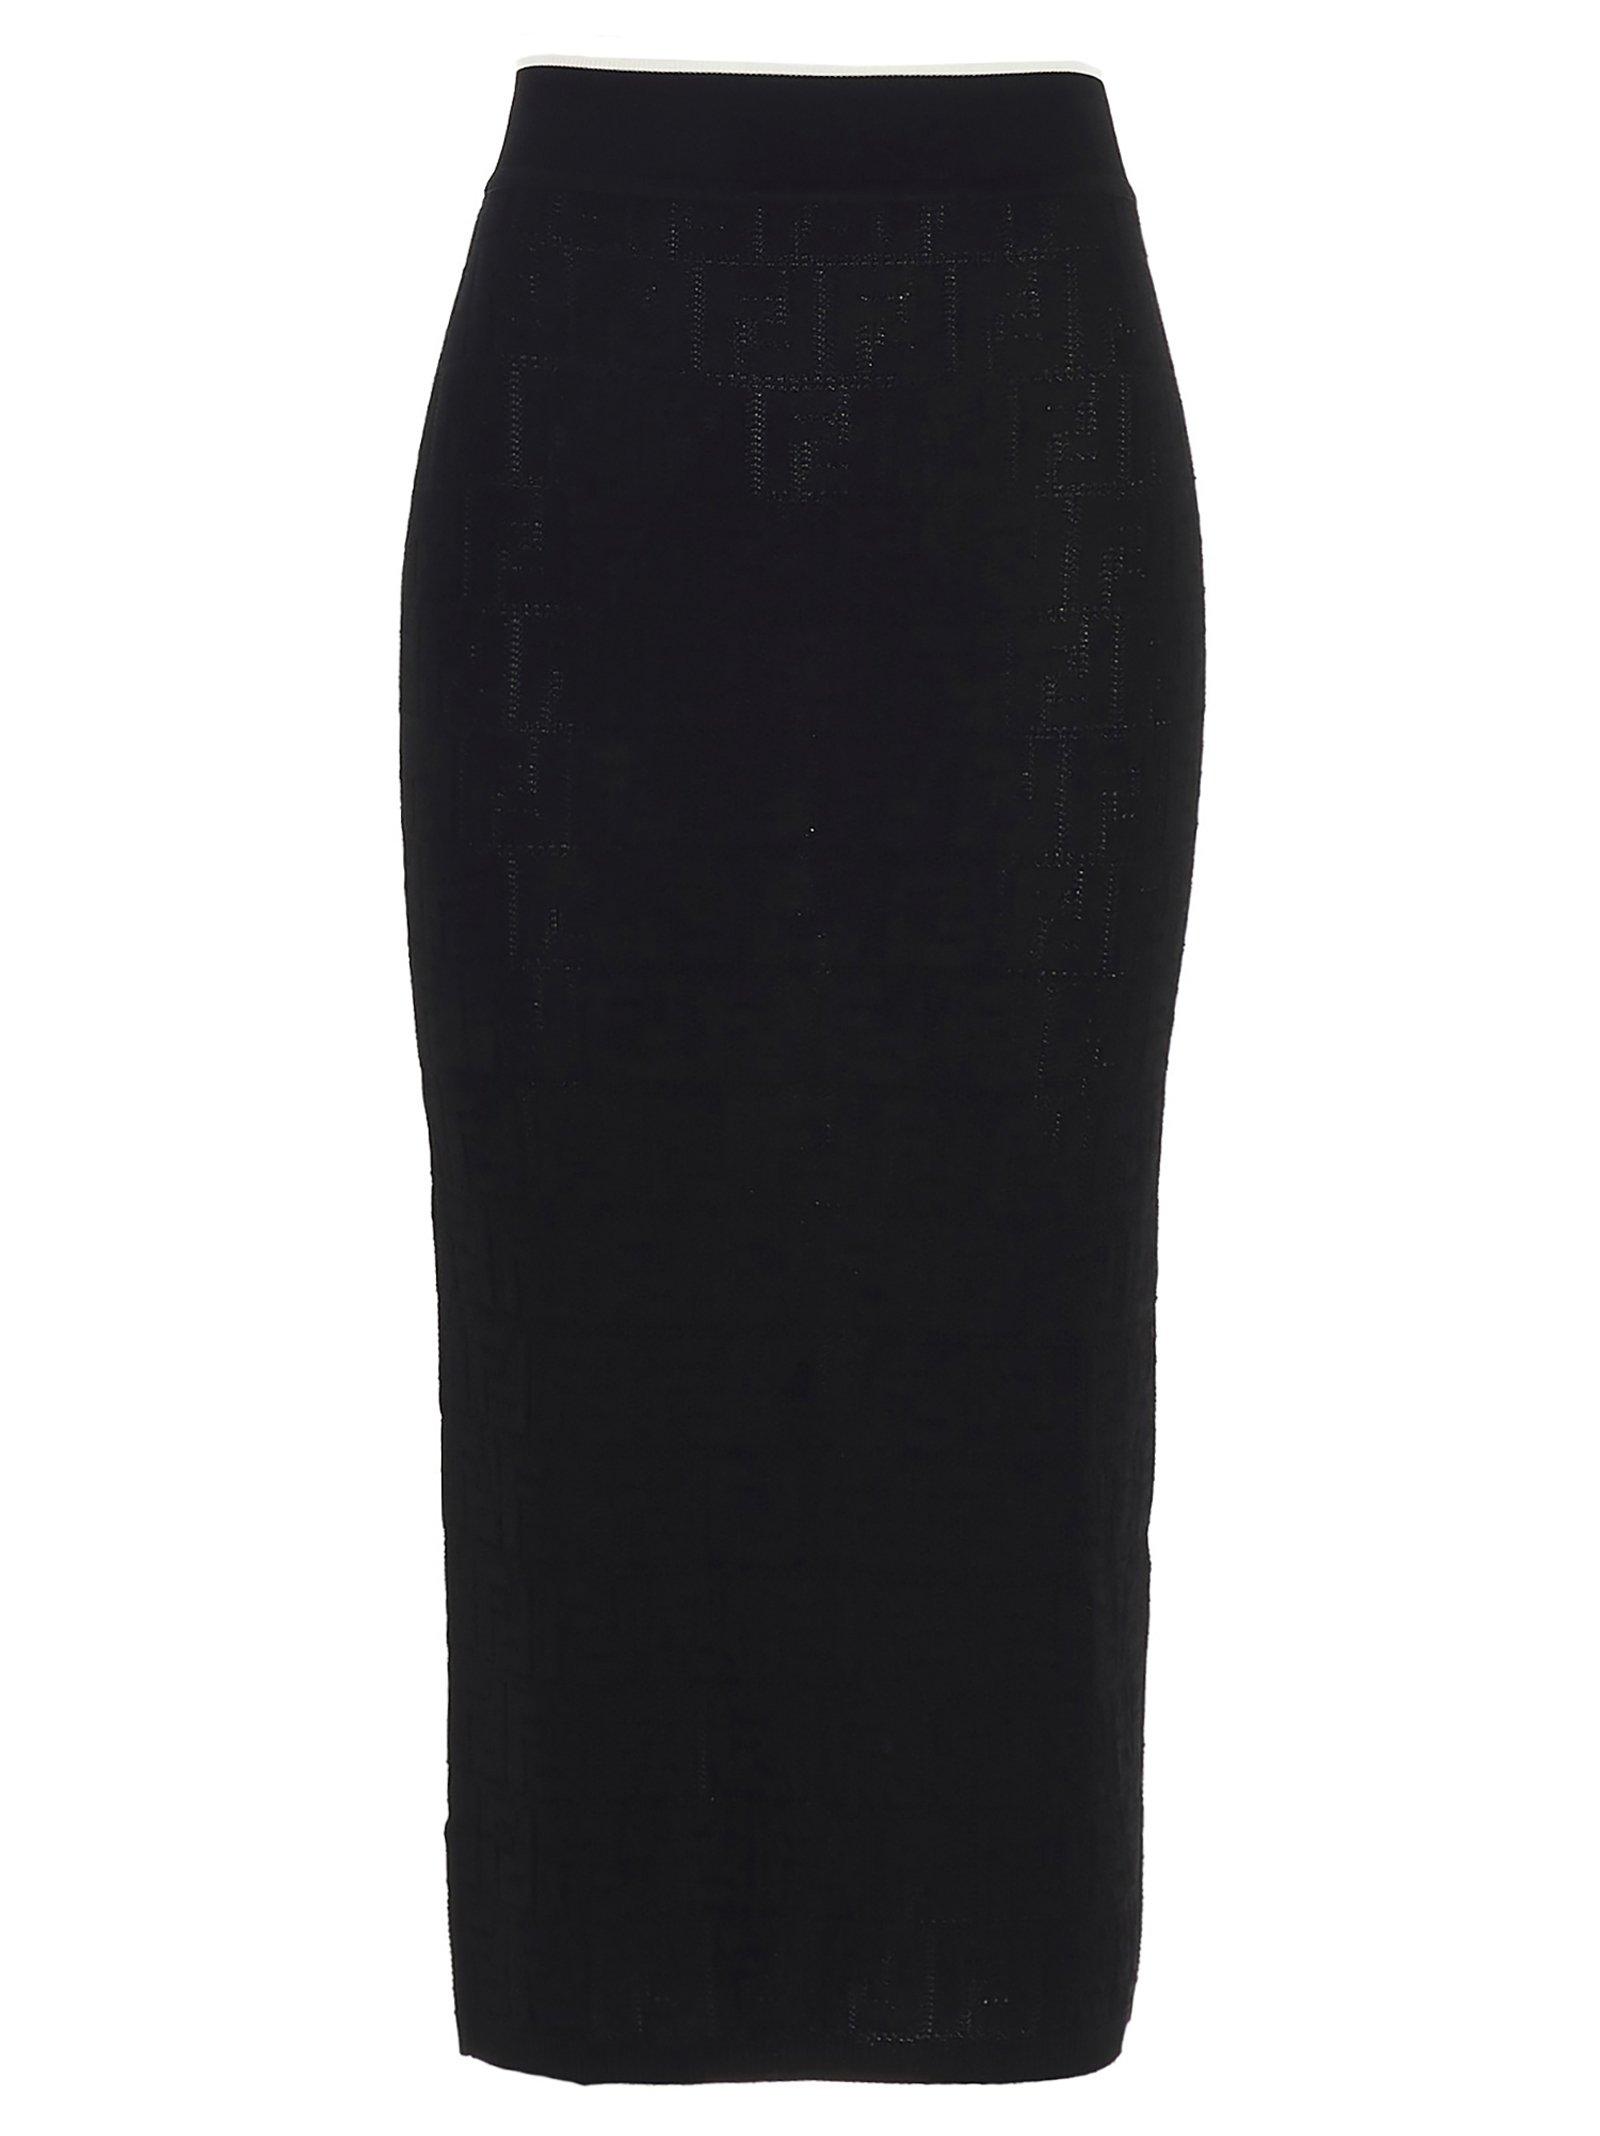 Fendi Cotton Ff Monogram Pencil Skirt in Black - Lyst